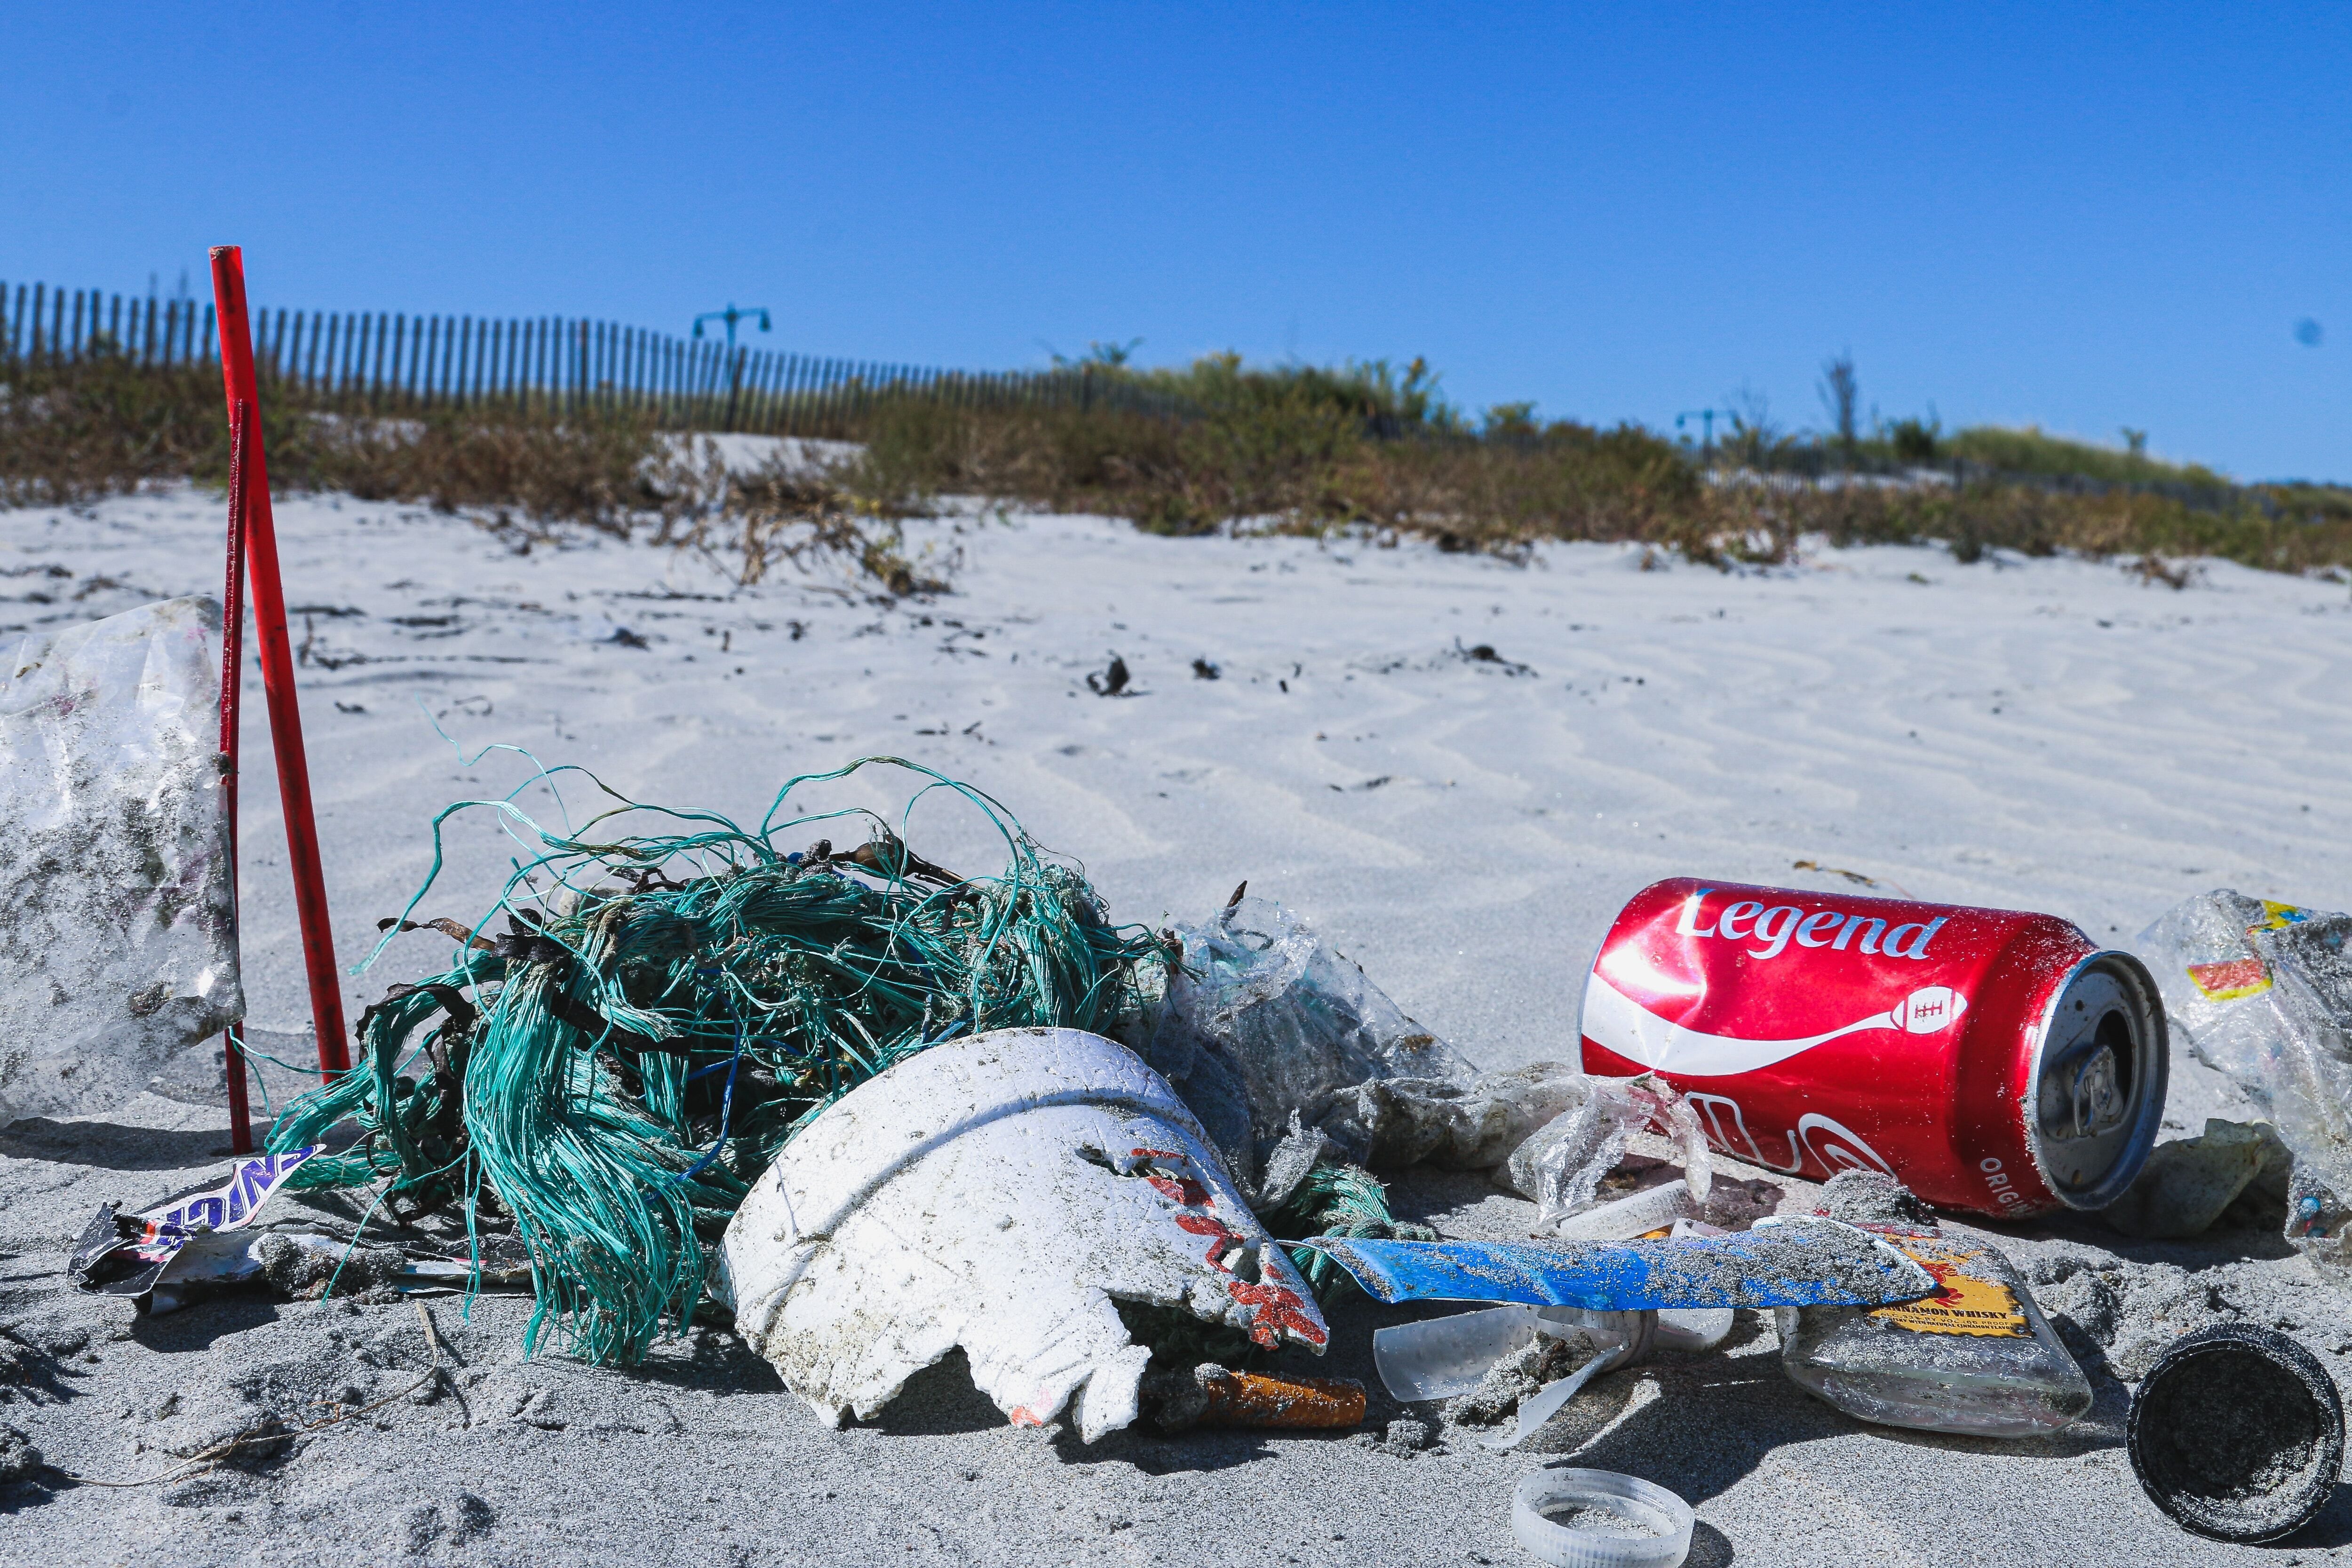 Let's Work to Minimize Marine Debris in Massachusetts